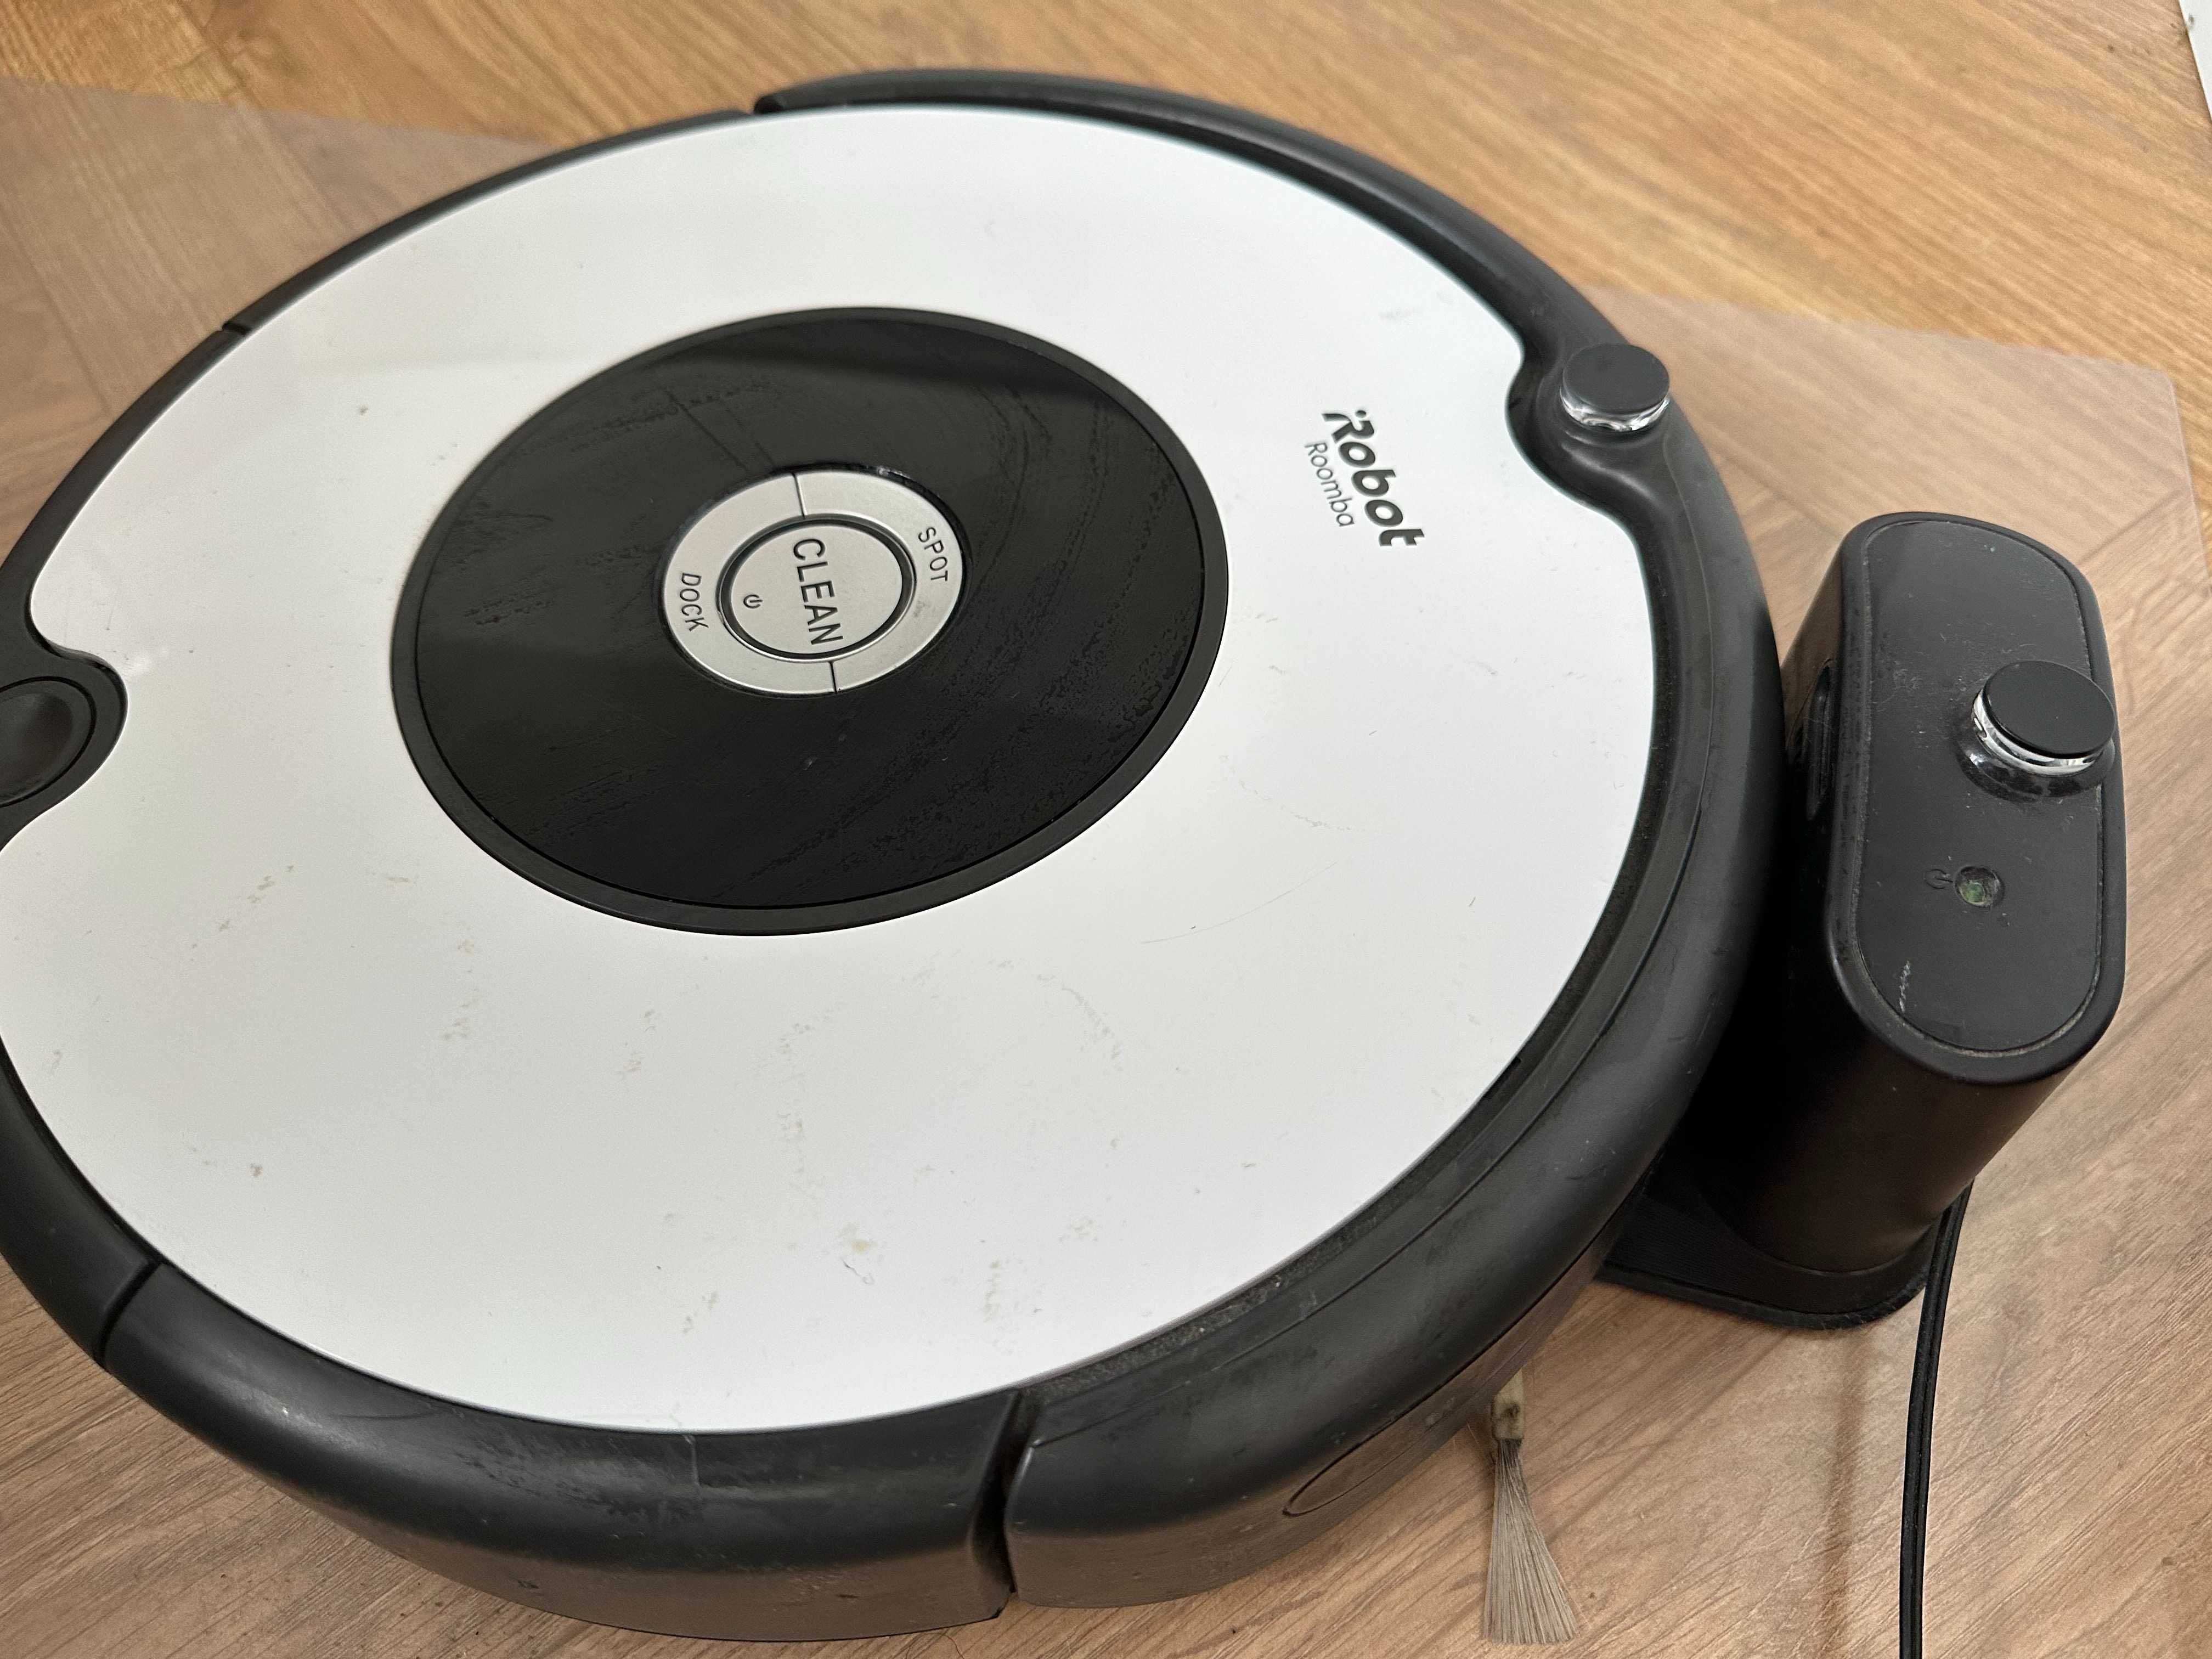 iRobot Roomba 605 biały